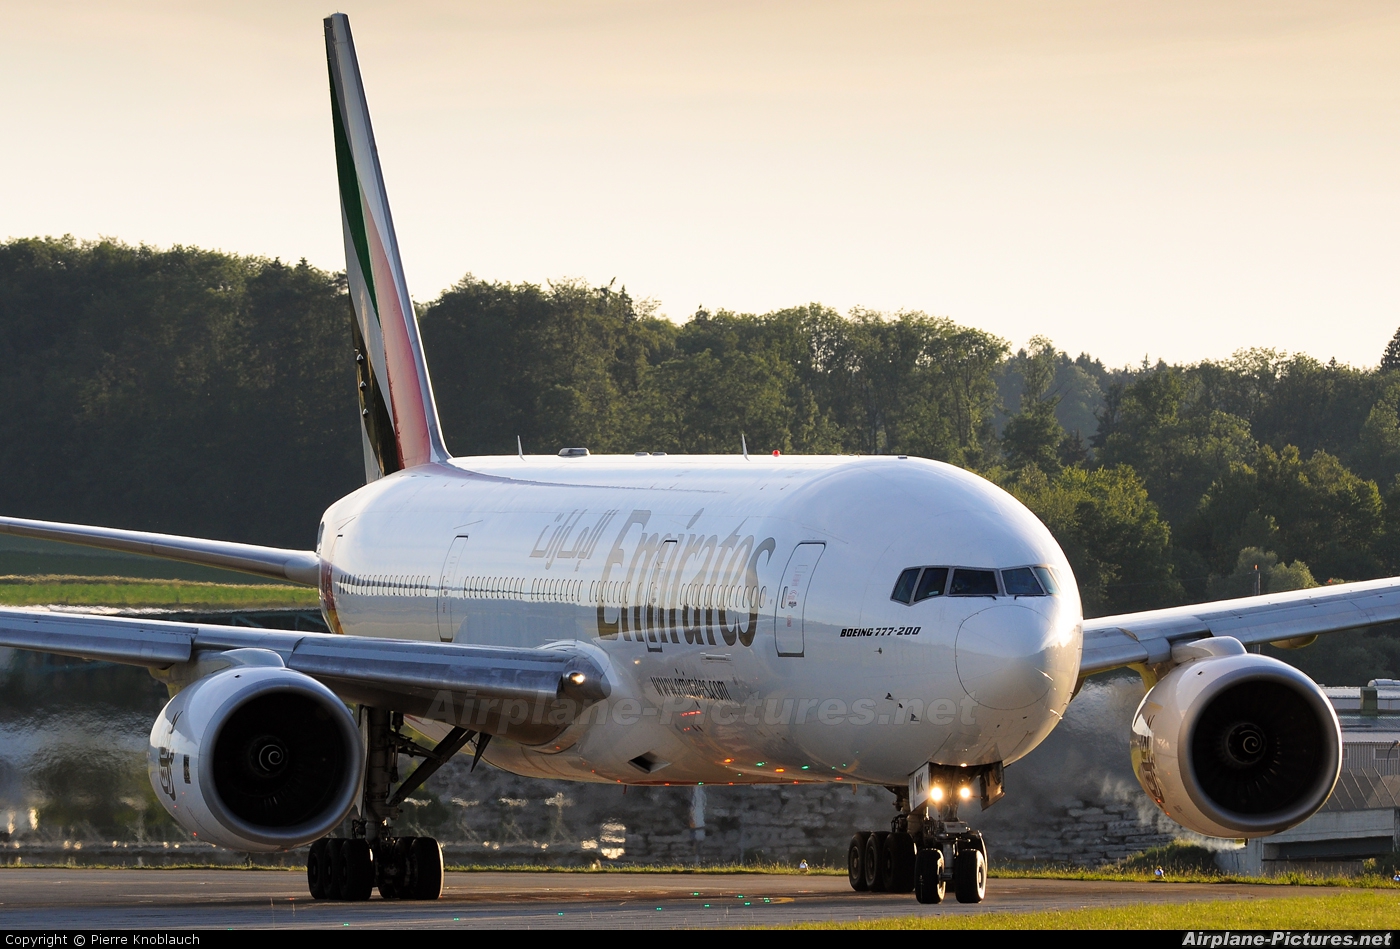 Emirates Airlines A6-EMK aircraft at Zurich